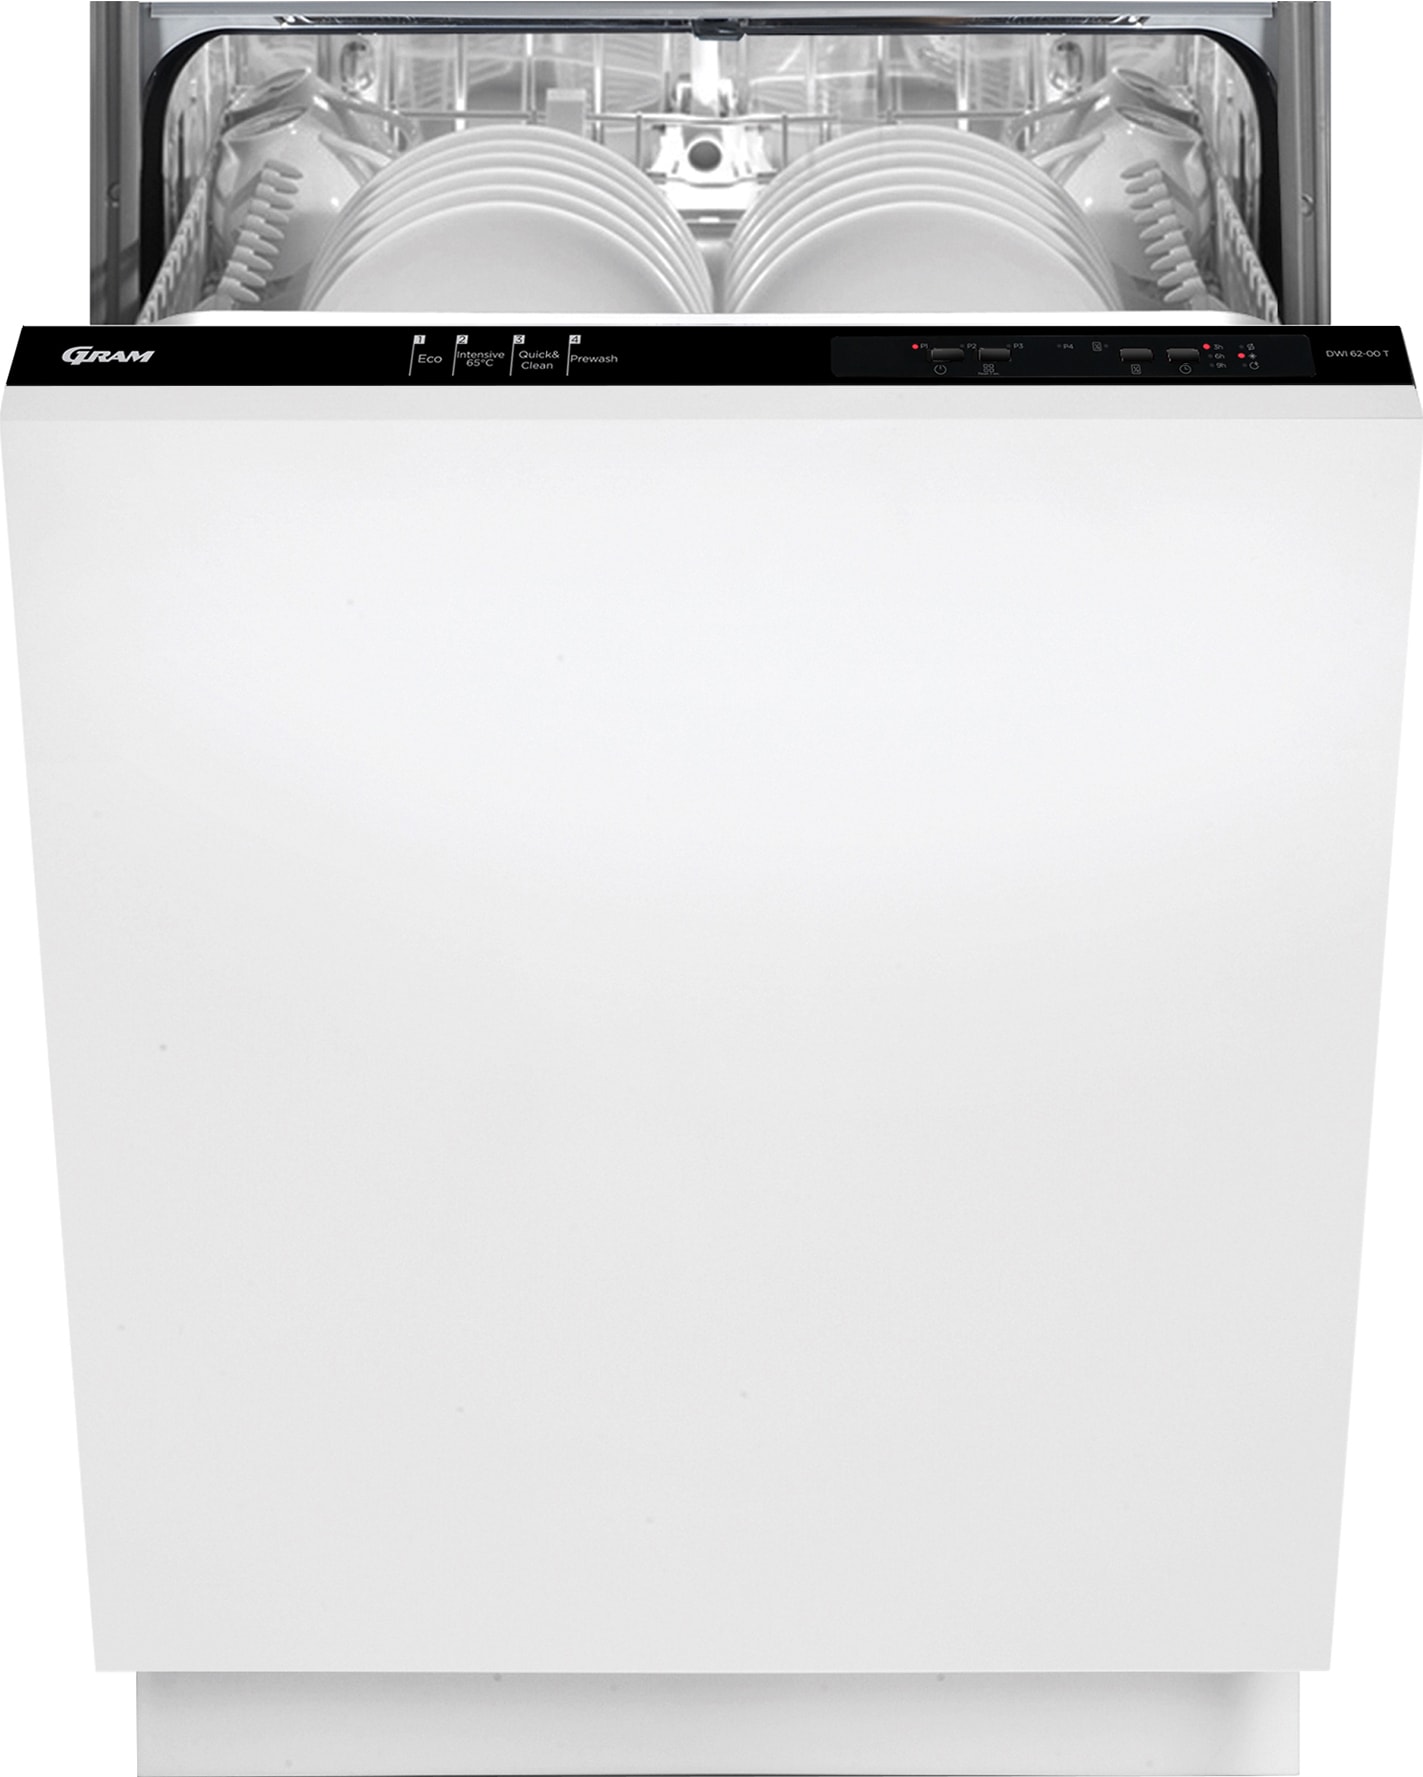 Gram opvaskemaskine DWI 62-00 T integreret